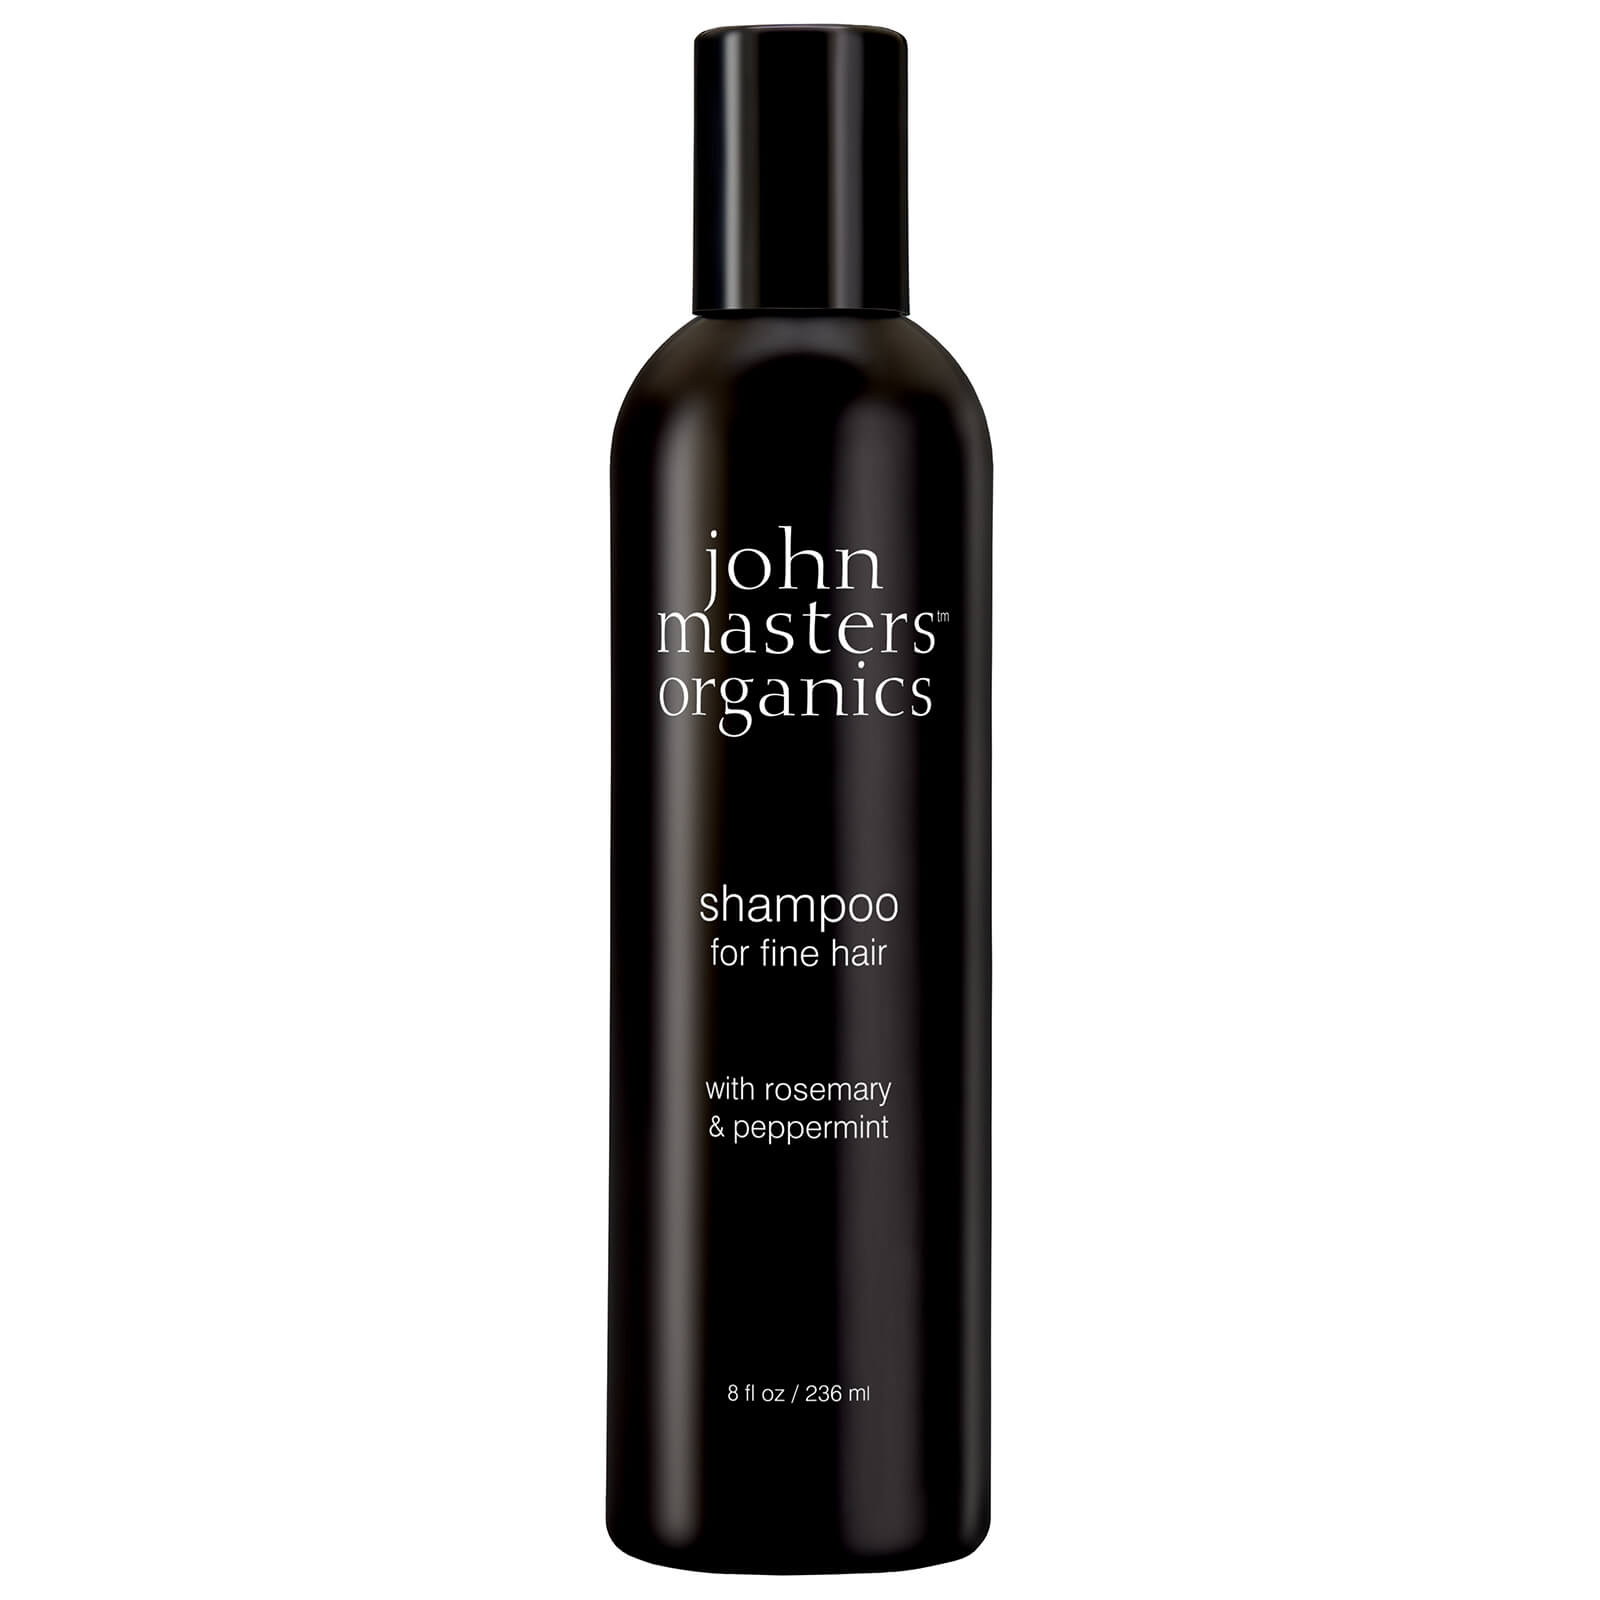 John Masters Organics Shampoo for Fine Hair with Rosemary & Peppermint